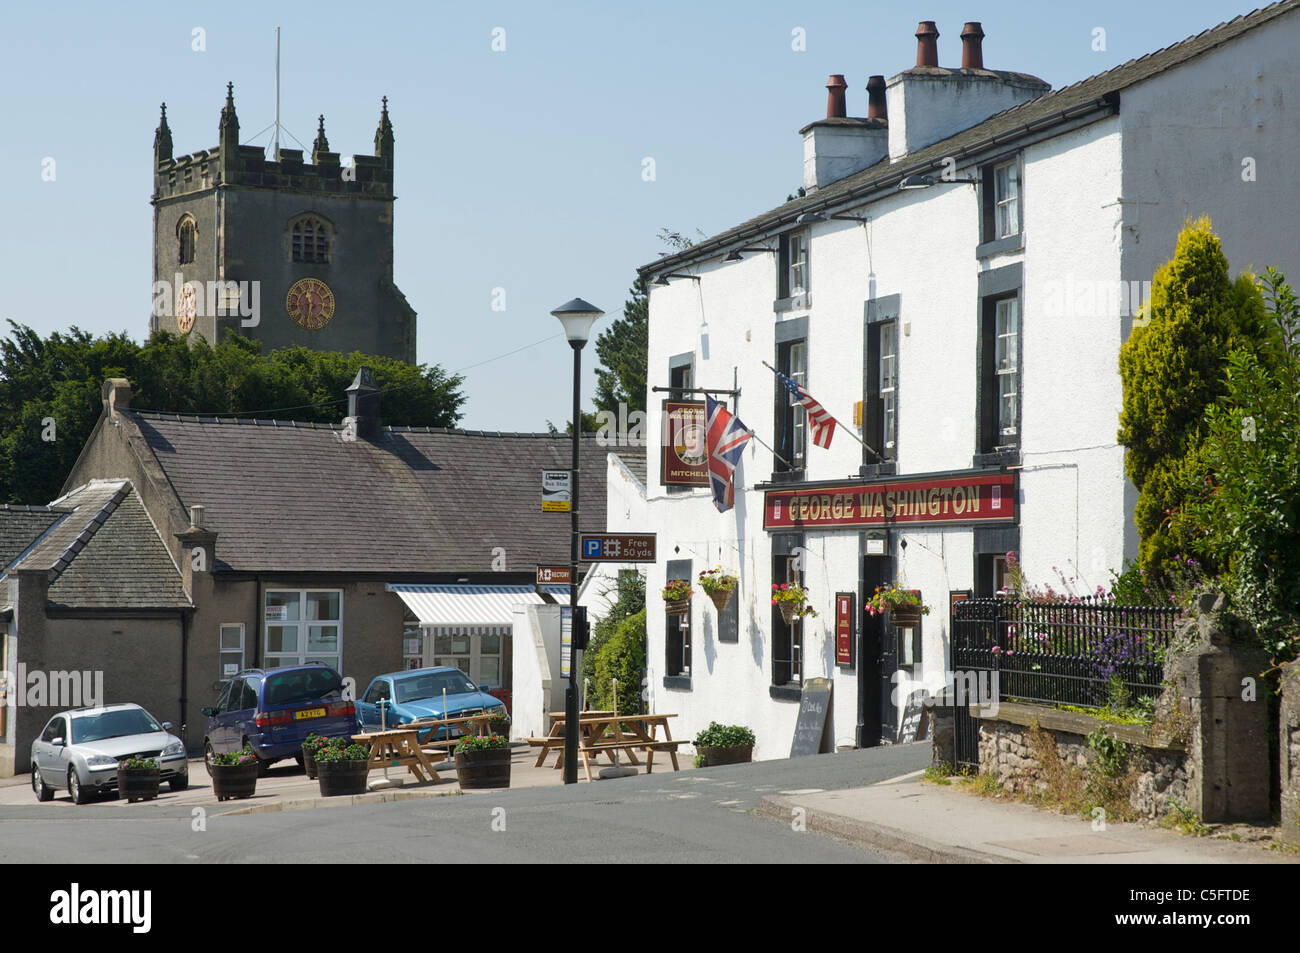 The George Washington pub in the village of Warton, near Carnforth, near Lancashire, England UK Stock Photo